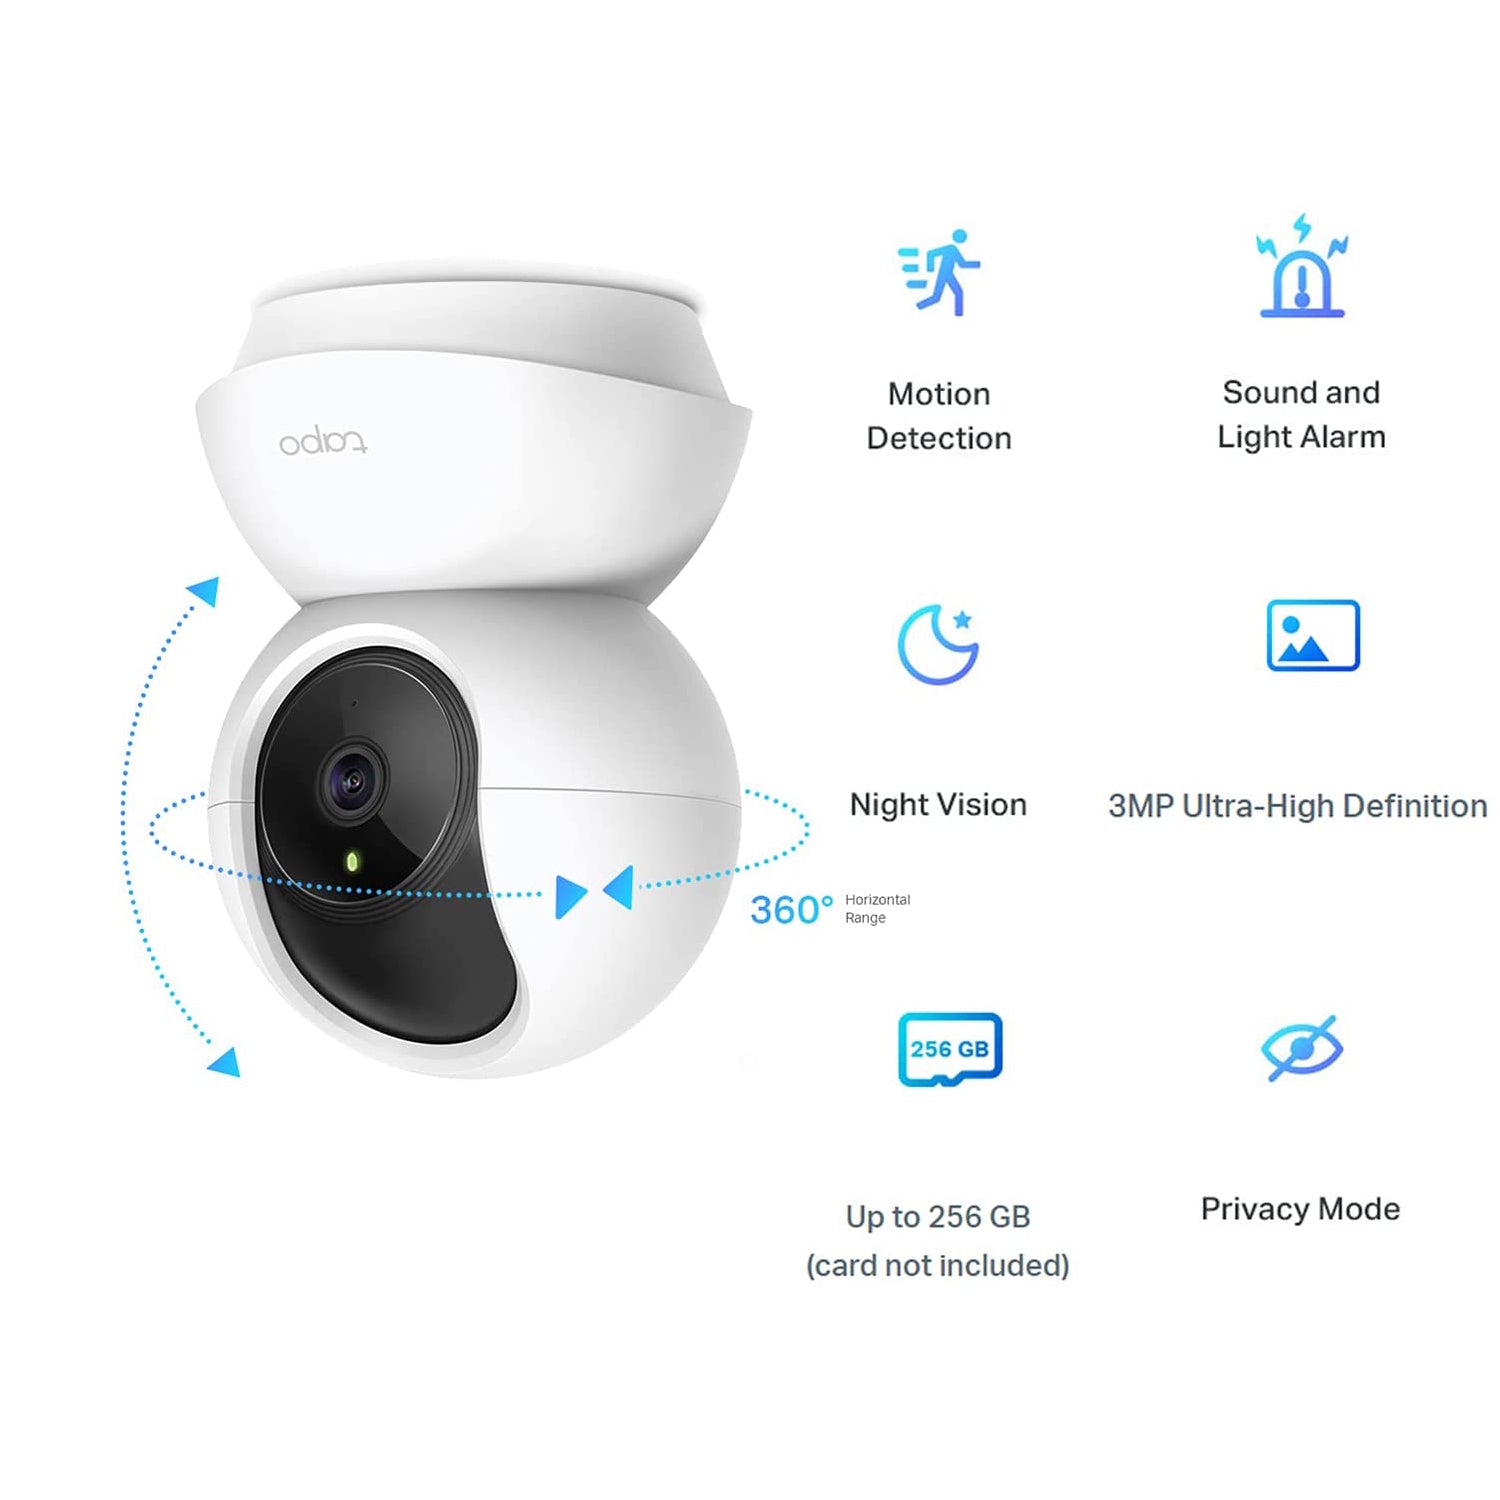 Tapo C210 Pan/Tilt Smart Security Camera 360°, 2K 3MP High Definition, 2-way Audio